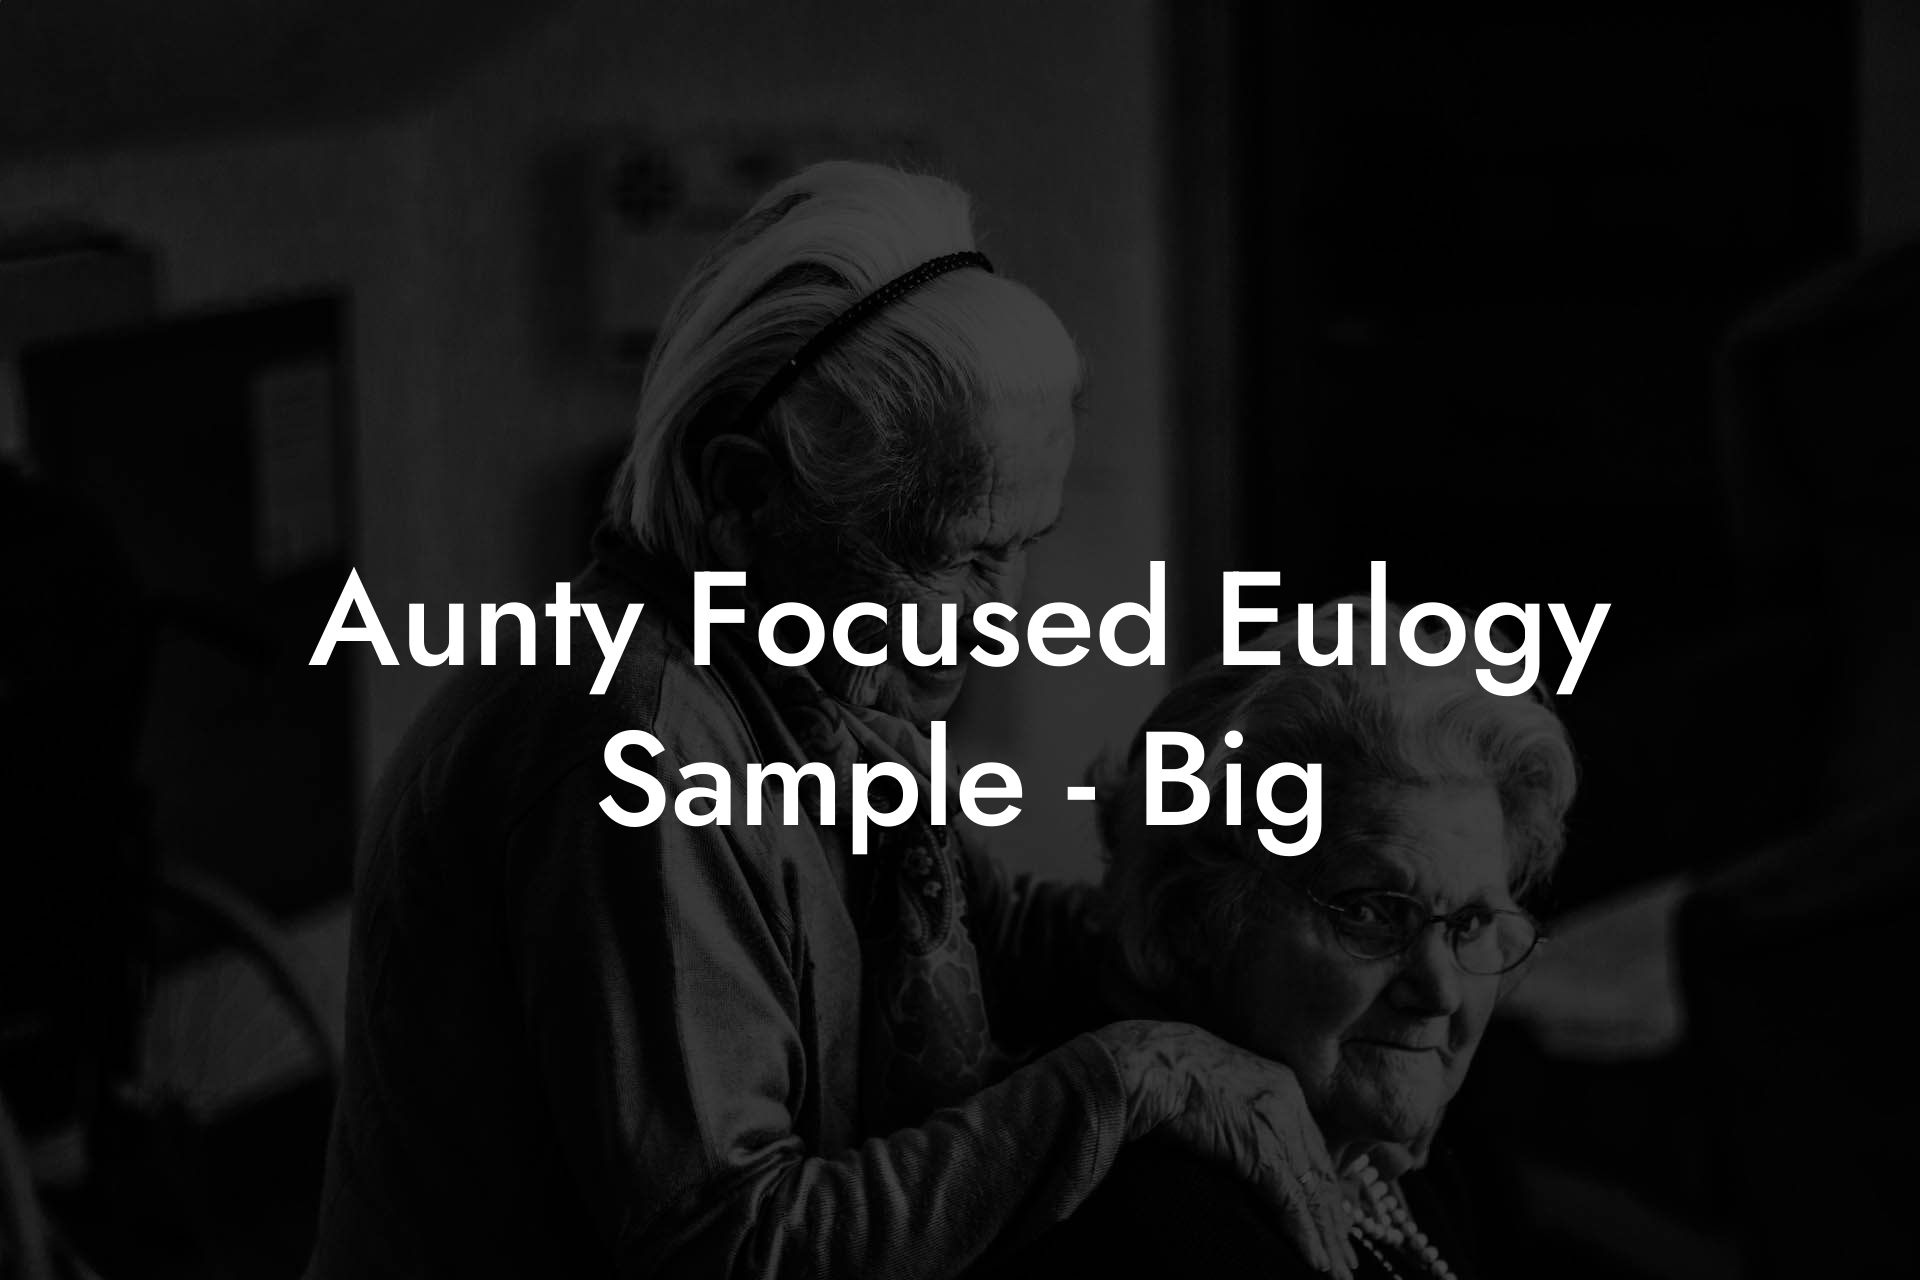 Aunty Focused Eulogy Sample - Big